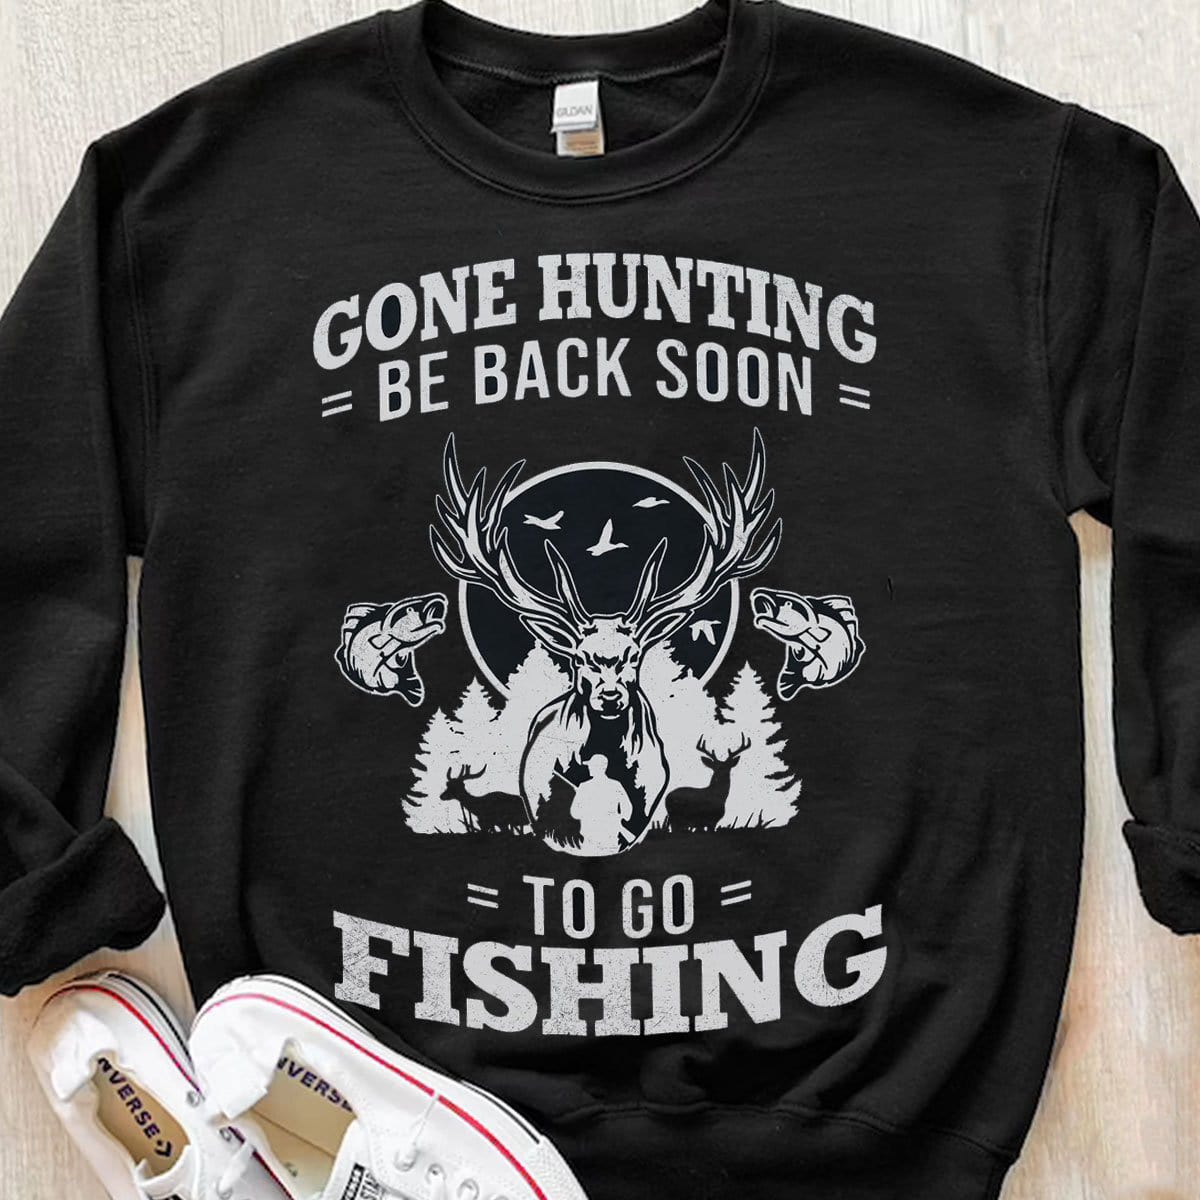 Men's EB Gone Fishing Graphic T-Shirt